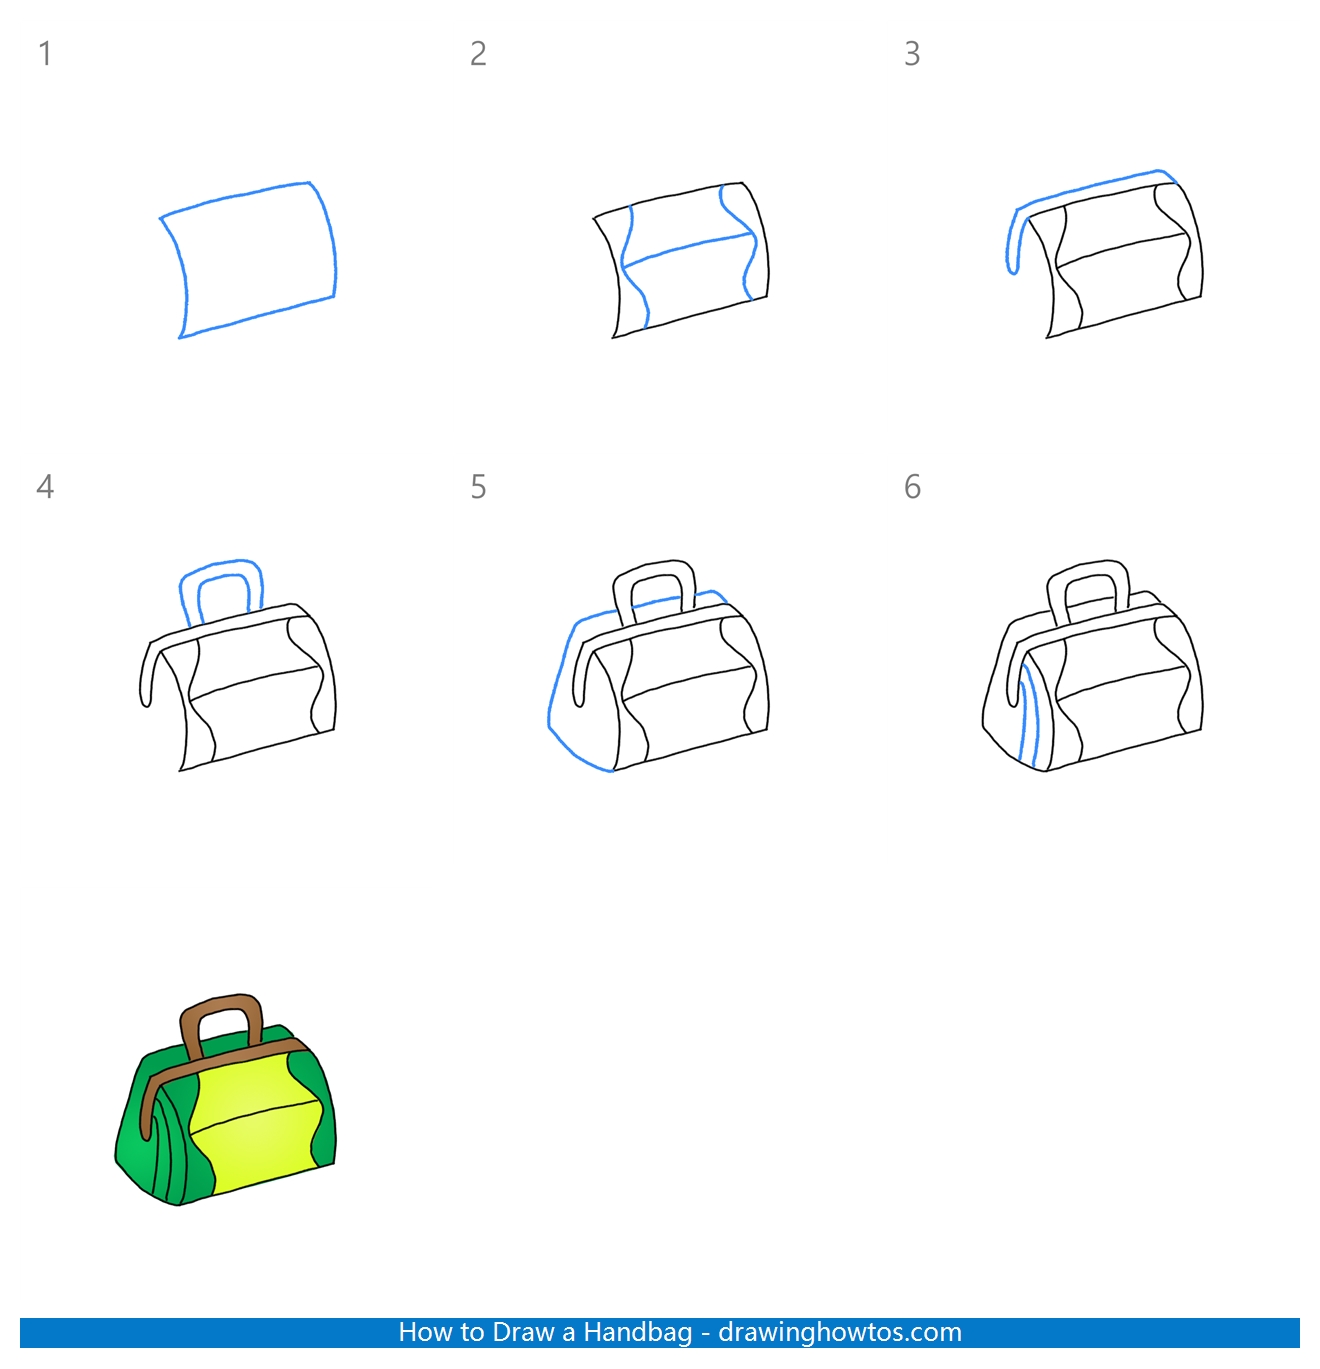 How to Draw a Handbag Step by Step